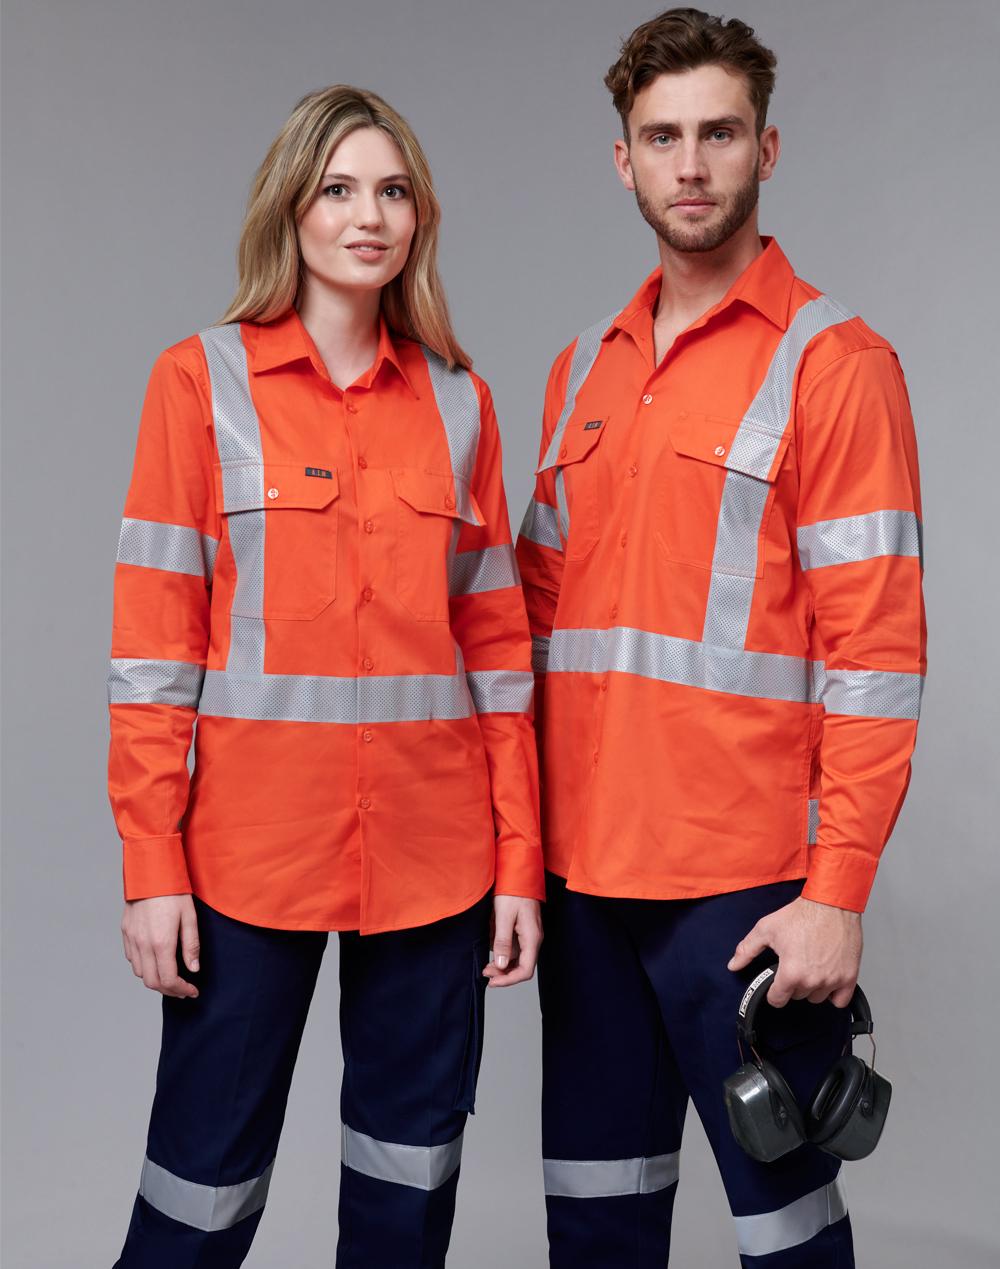 AIW SW66 NSW Rail Lightweight Safety Shirt